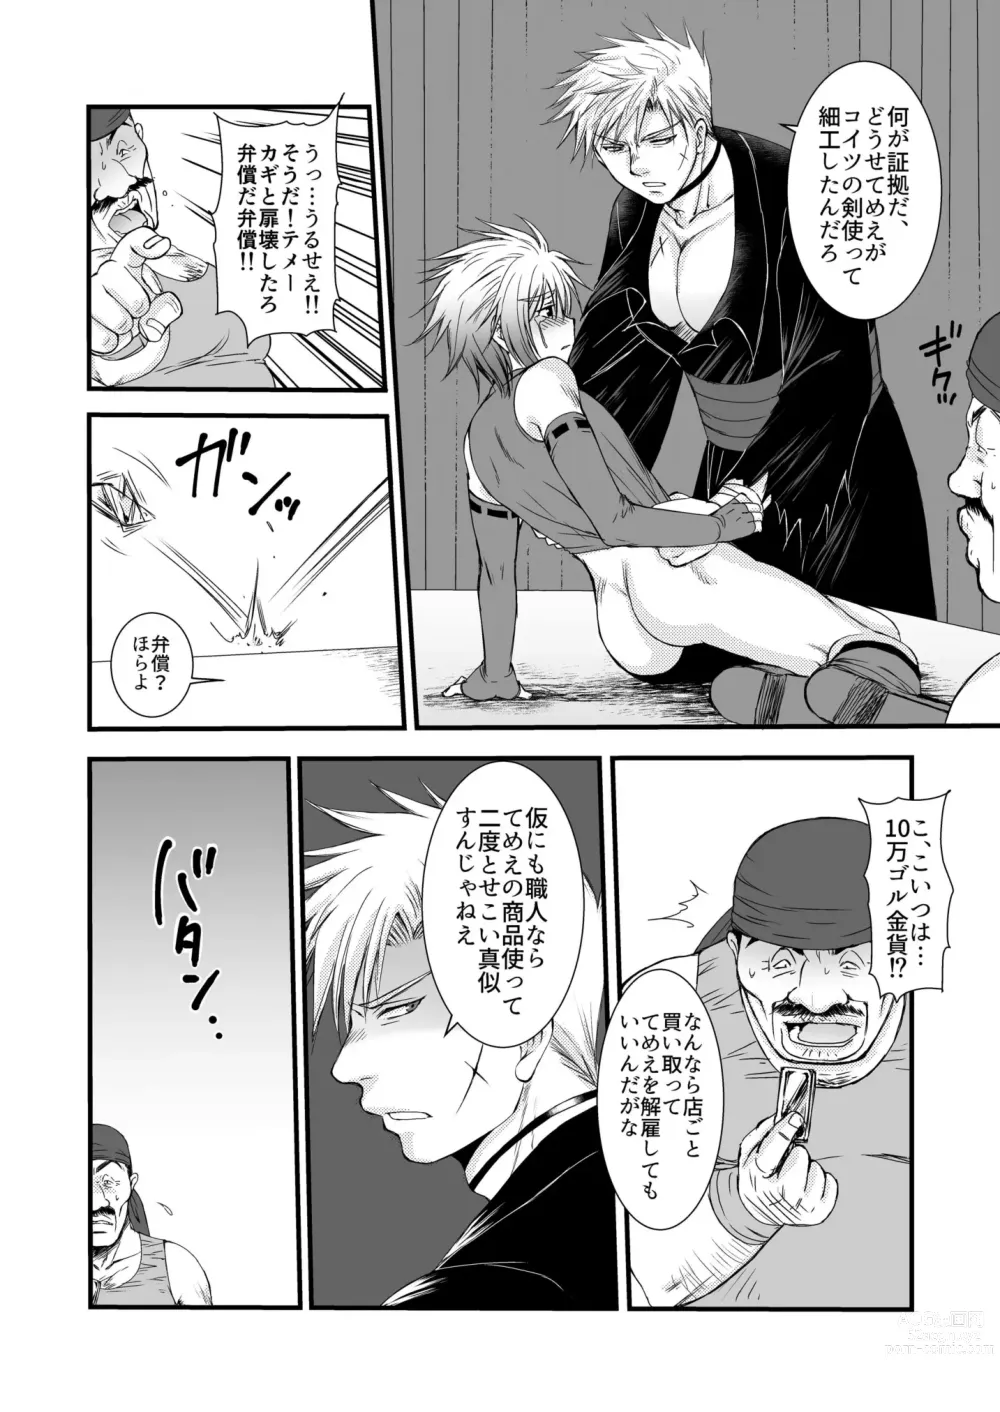 Page 36 of doujinshi Benshoushiro ga Tarinakute